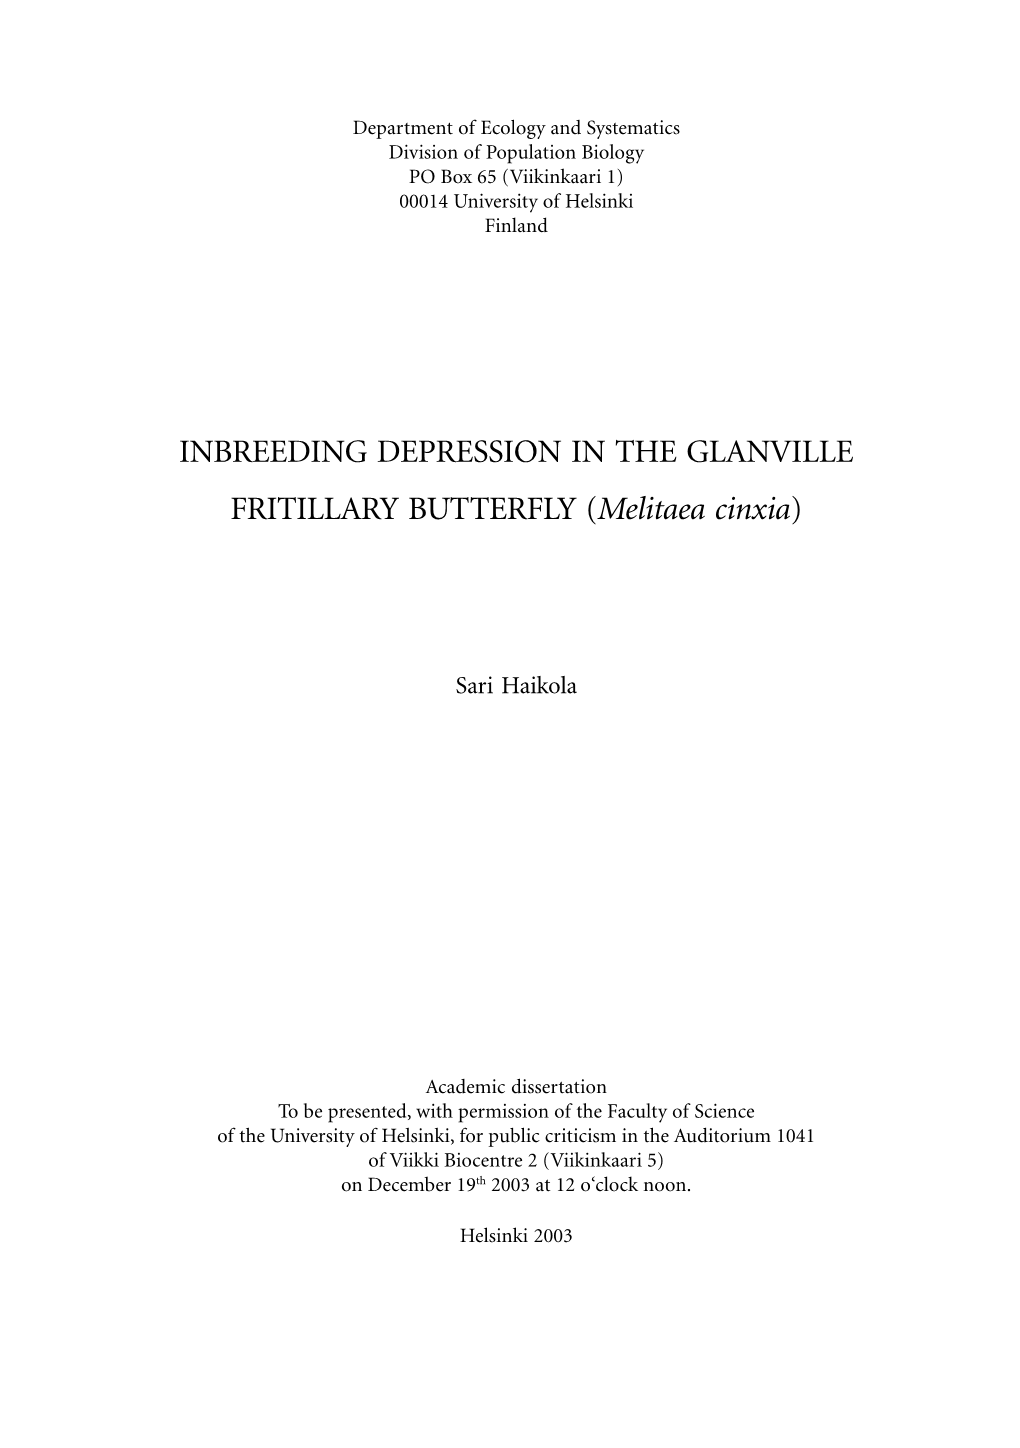 INBREEDING DEPRESSION in the GLANVILLE FRITILLARY BUTTERFLY (Melitaea Cinxia)